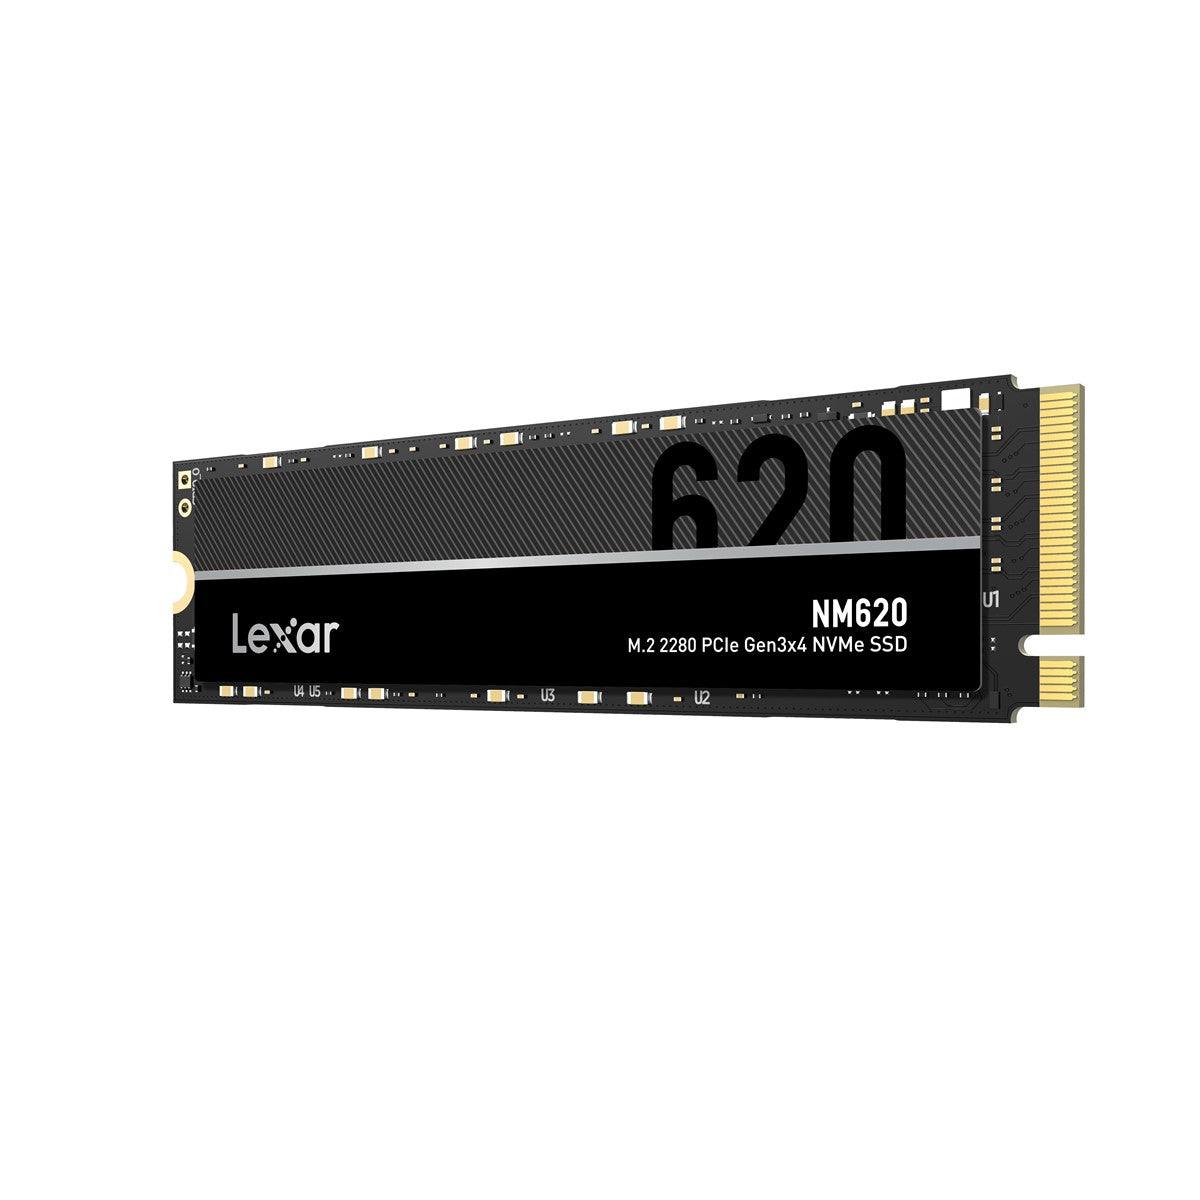 LEXAR SSD NM620X 512GB GEN3X4 M.2 NVMe SSD